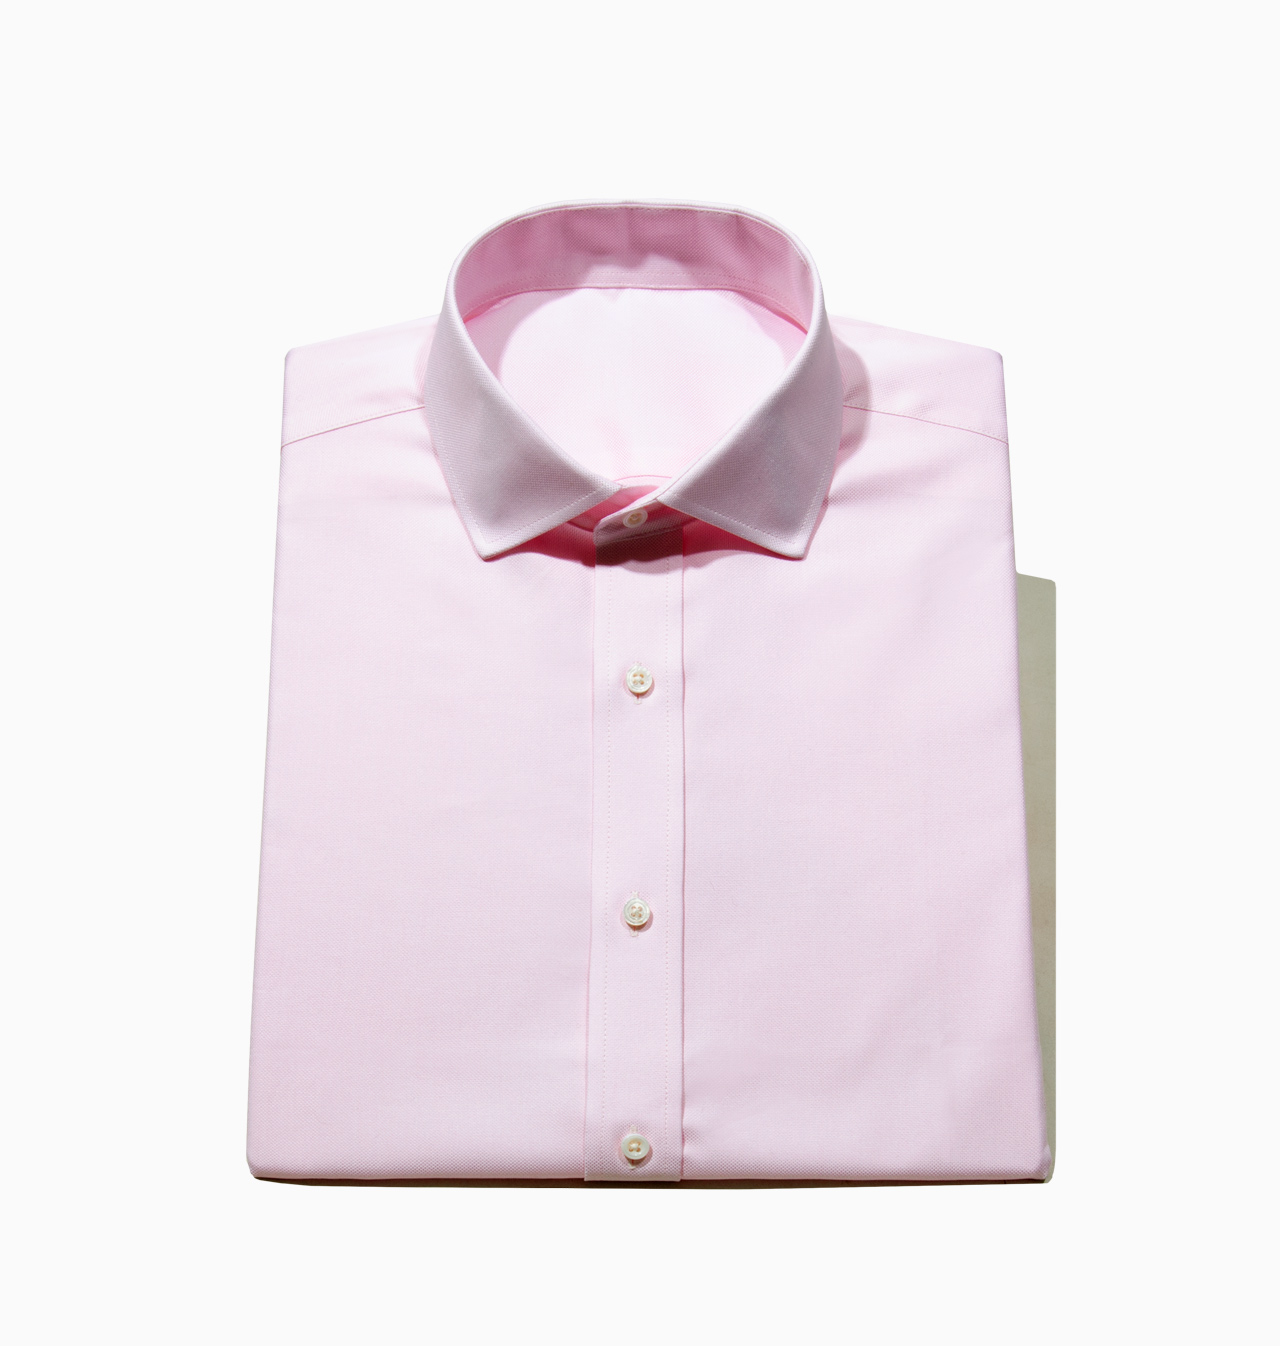 Men’s Tailored Light Pink Royal Oxford Dress Shirt